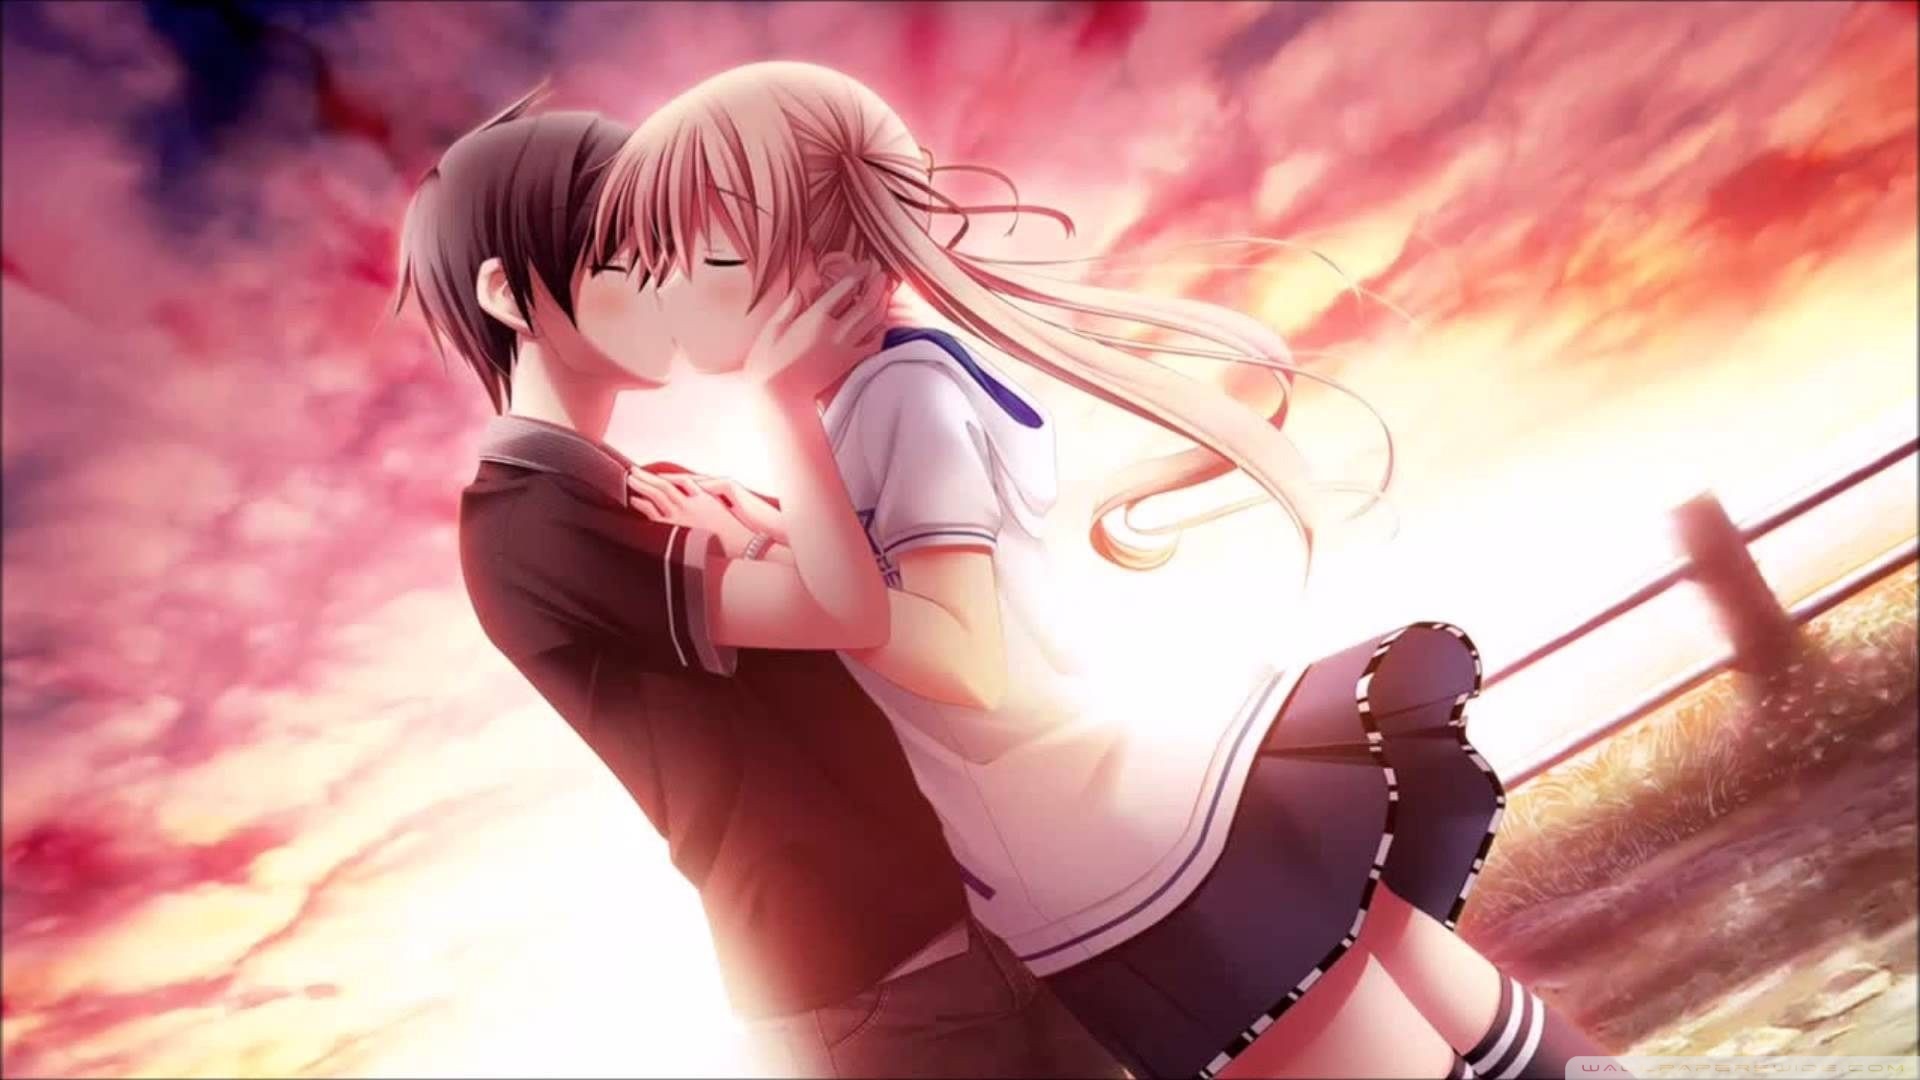 Love Kiss Of Cute Anime Couple Ultra HD Desktop Background Wallpaper for 4K  UHD TV